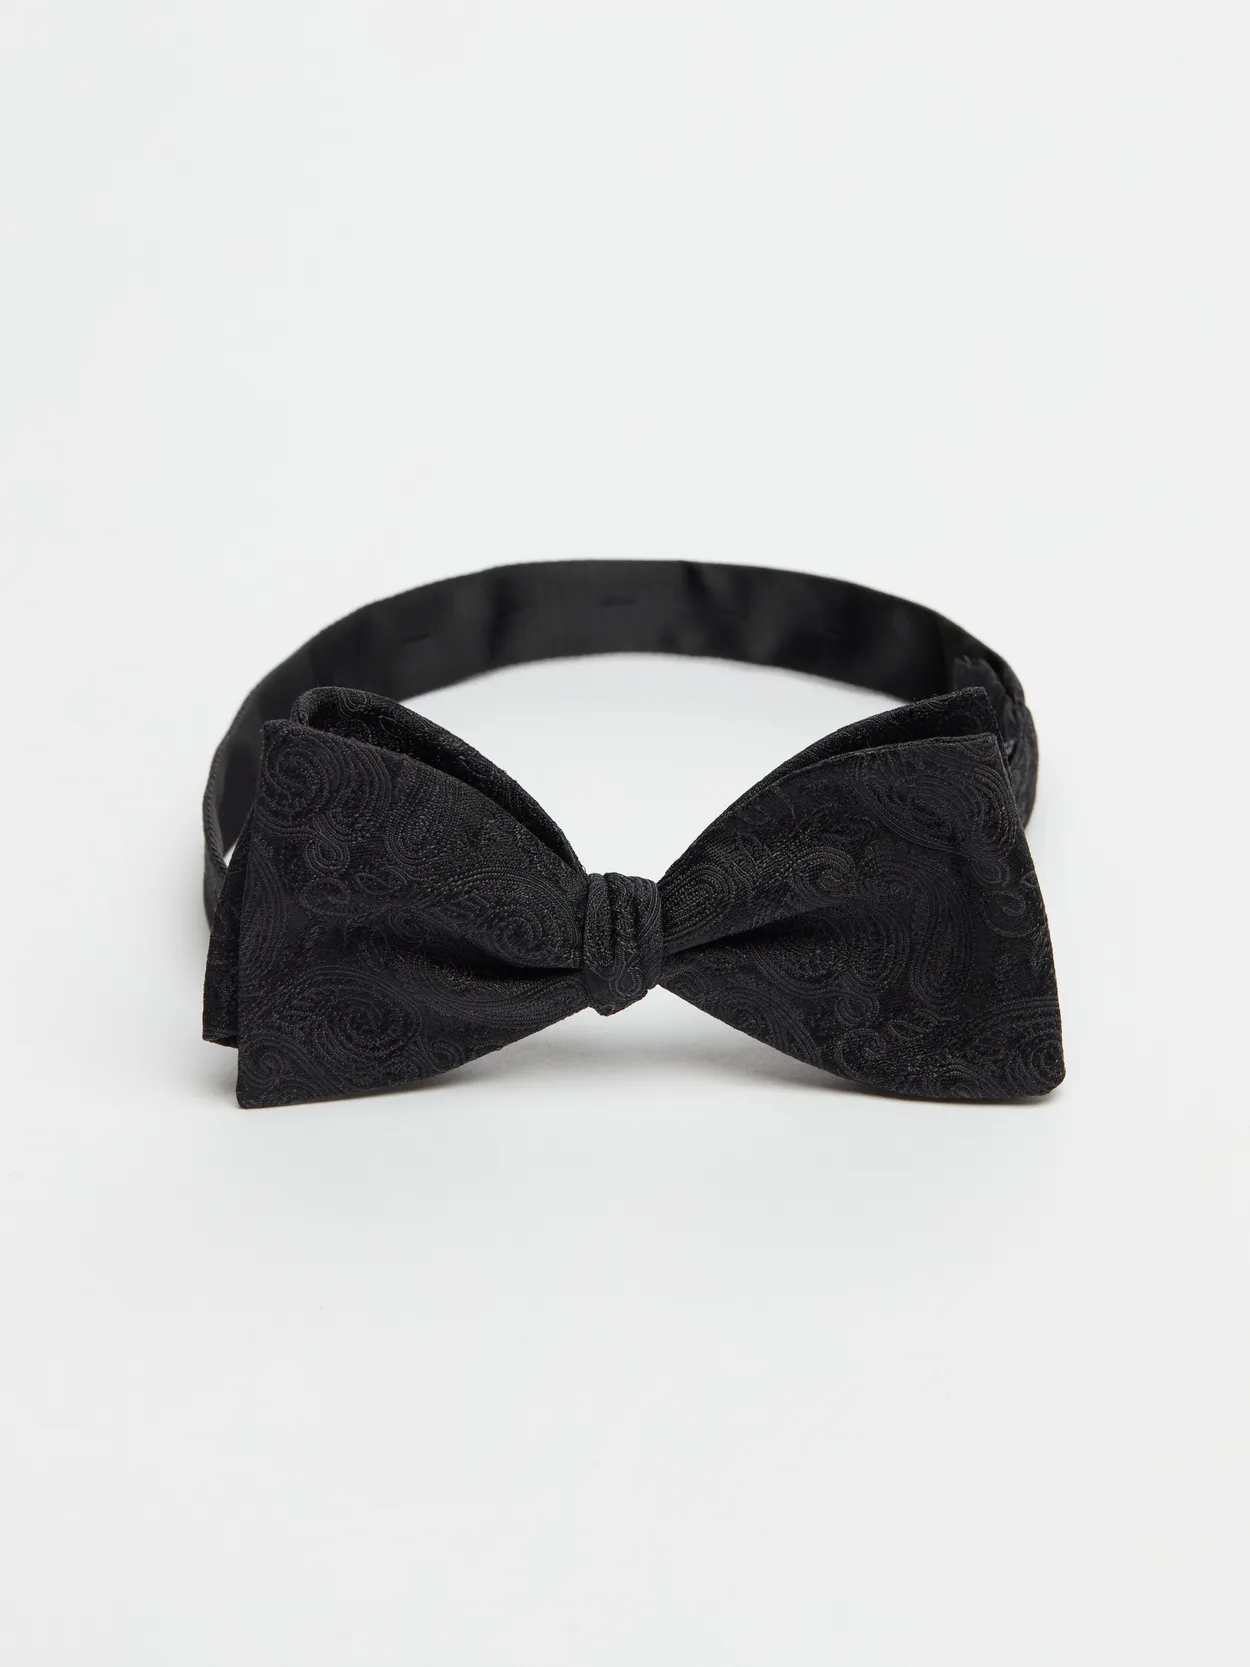 Black Bow Tie Formal 